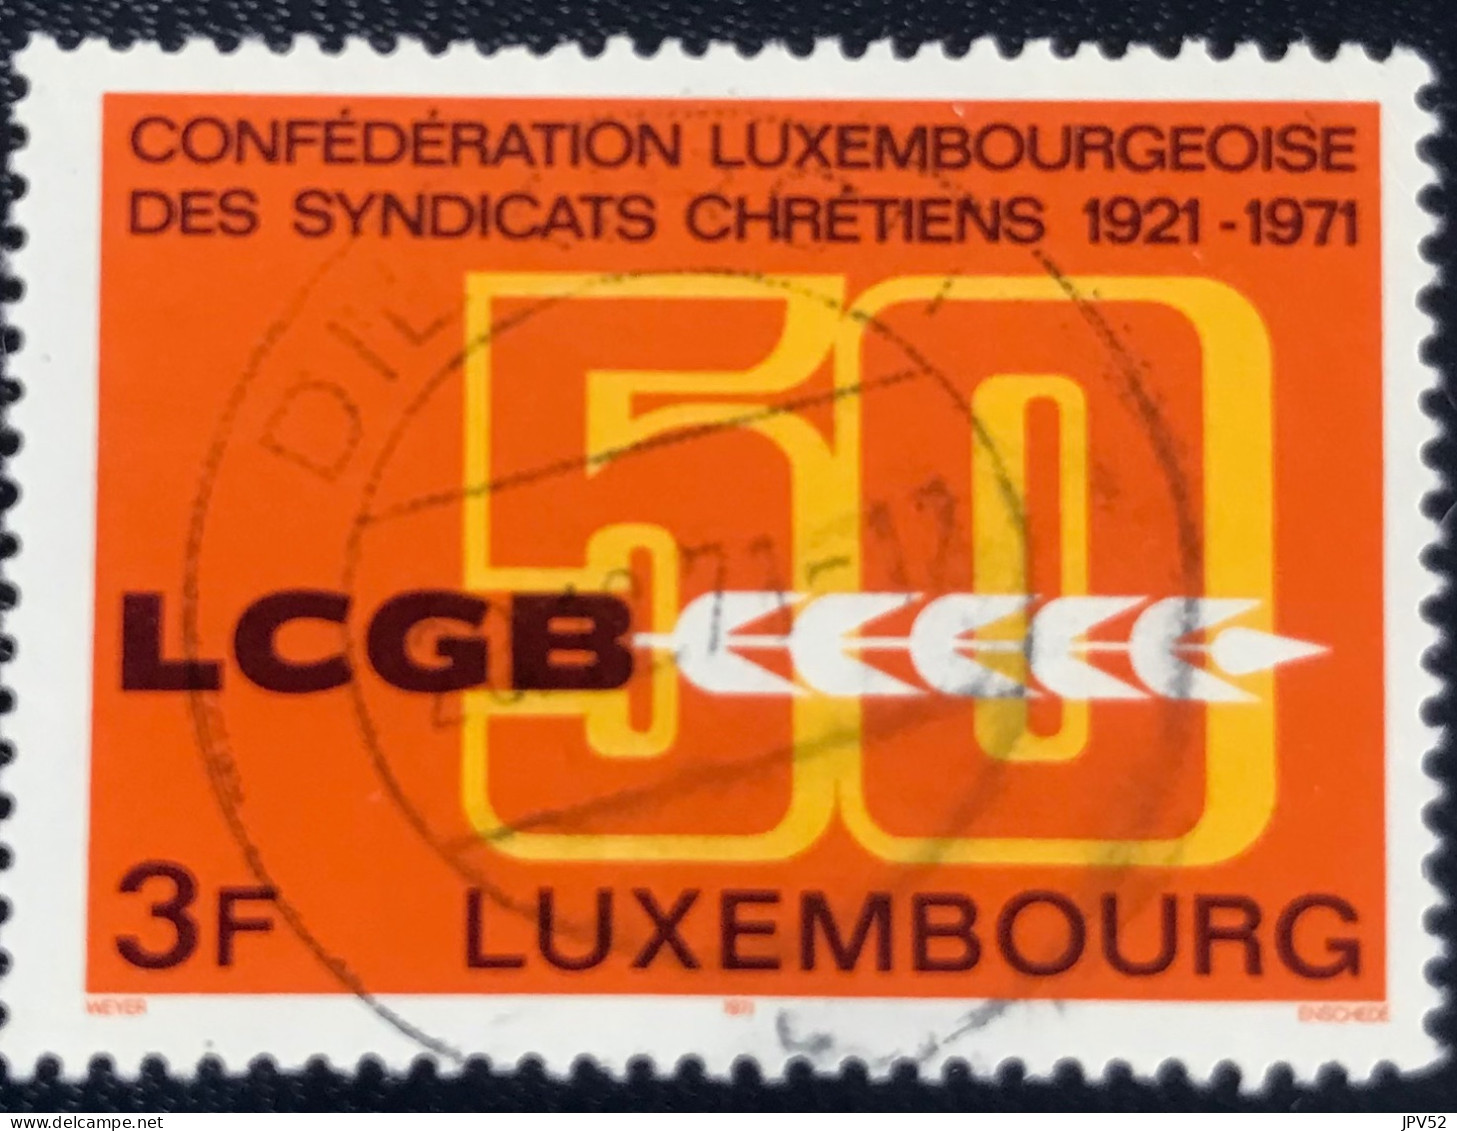 Luxembourg - Luxemburg - C18/31 - 1971 - (°)used - Michel 827 - LCGB Embleem - Gebraucht